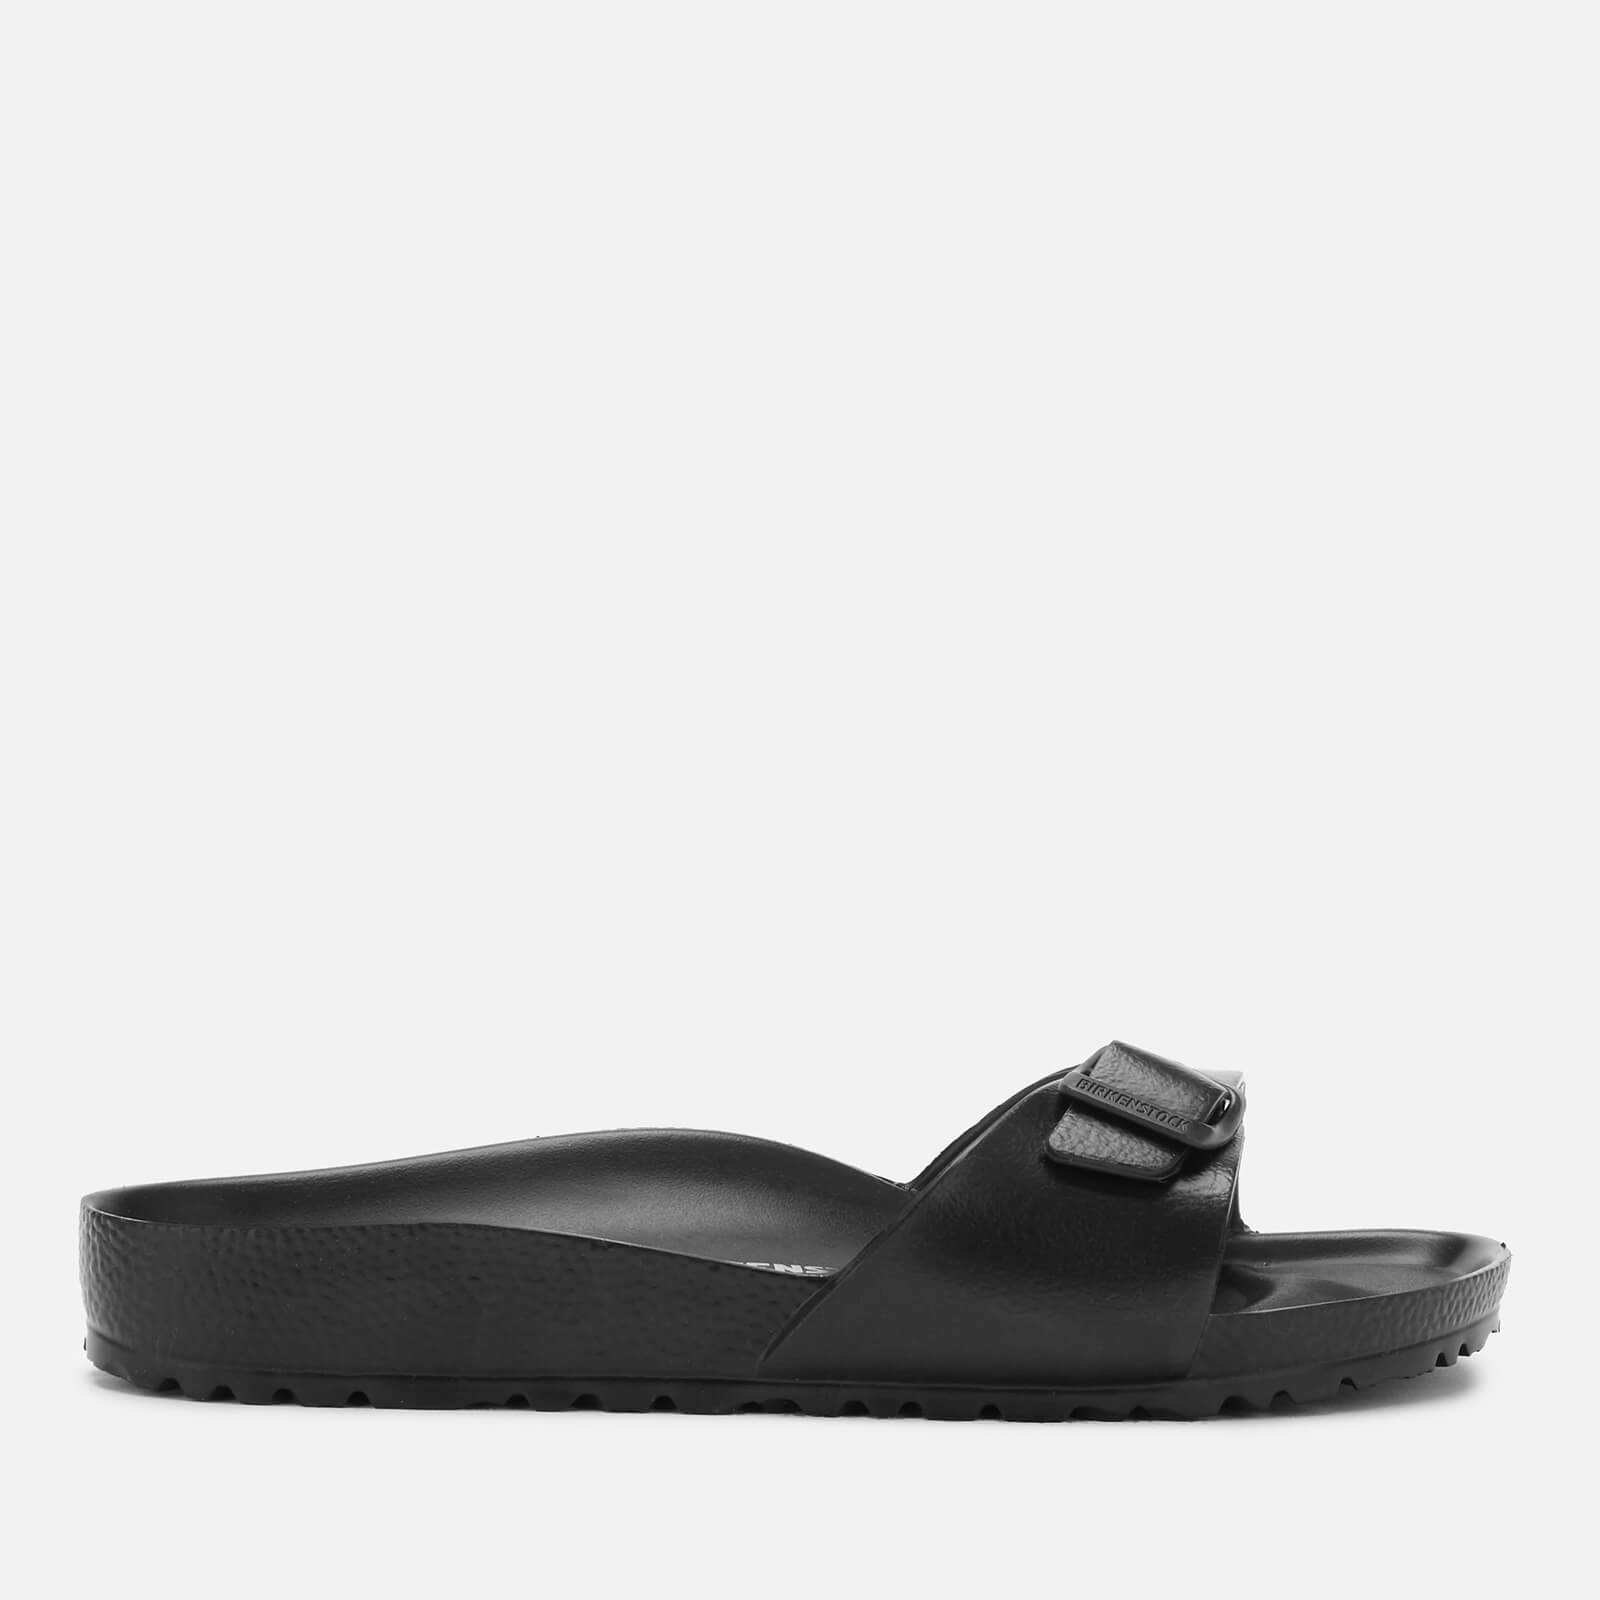 Birkenstock Women's Madrid Eva Single Strap Sandals - Black - EU 36/UK 3.5